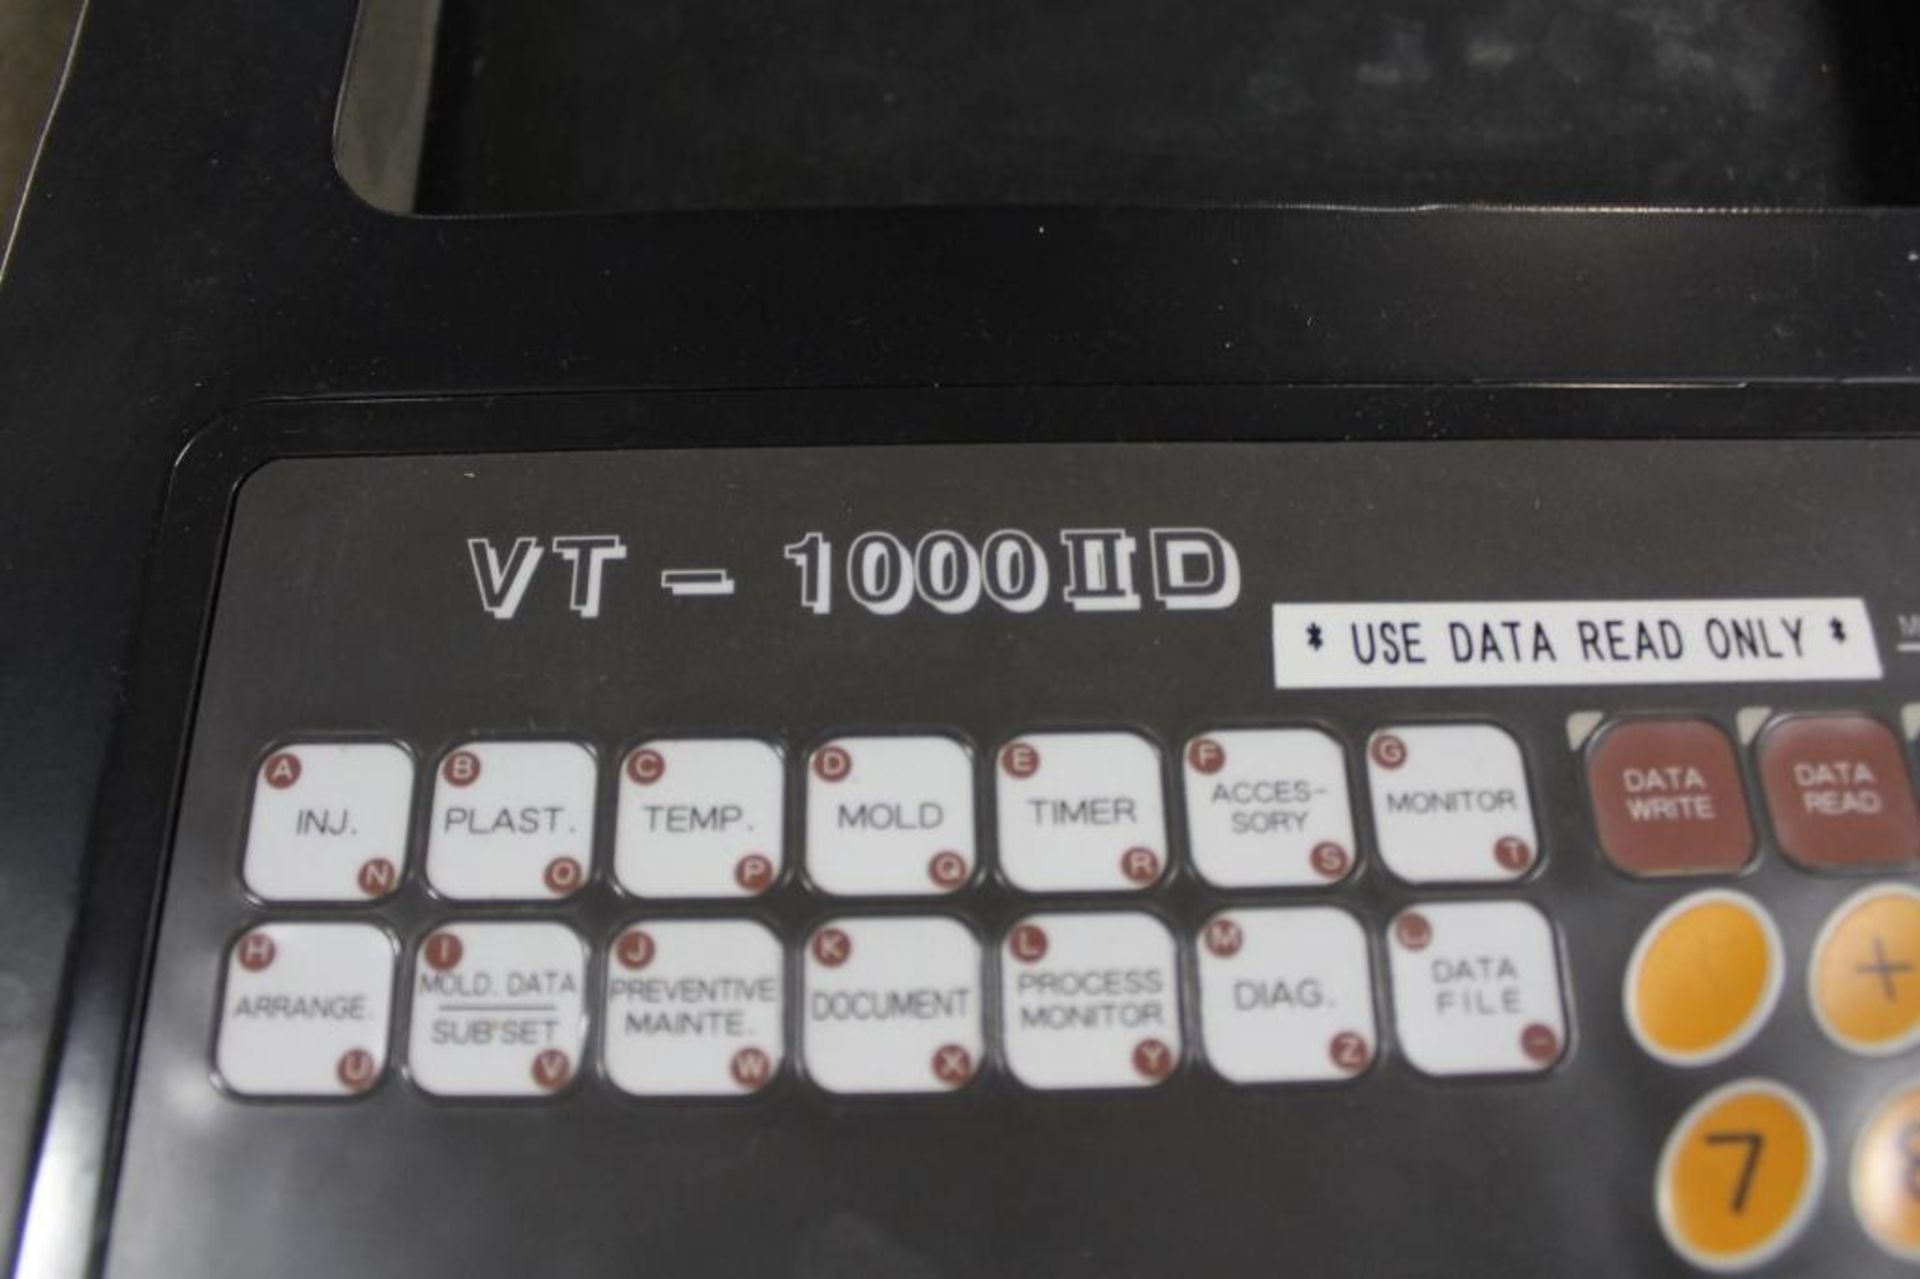 VT-1000IID Panel & Keyboard - Image 2 of 2